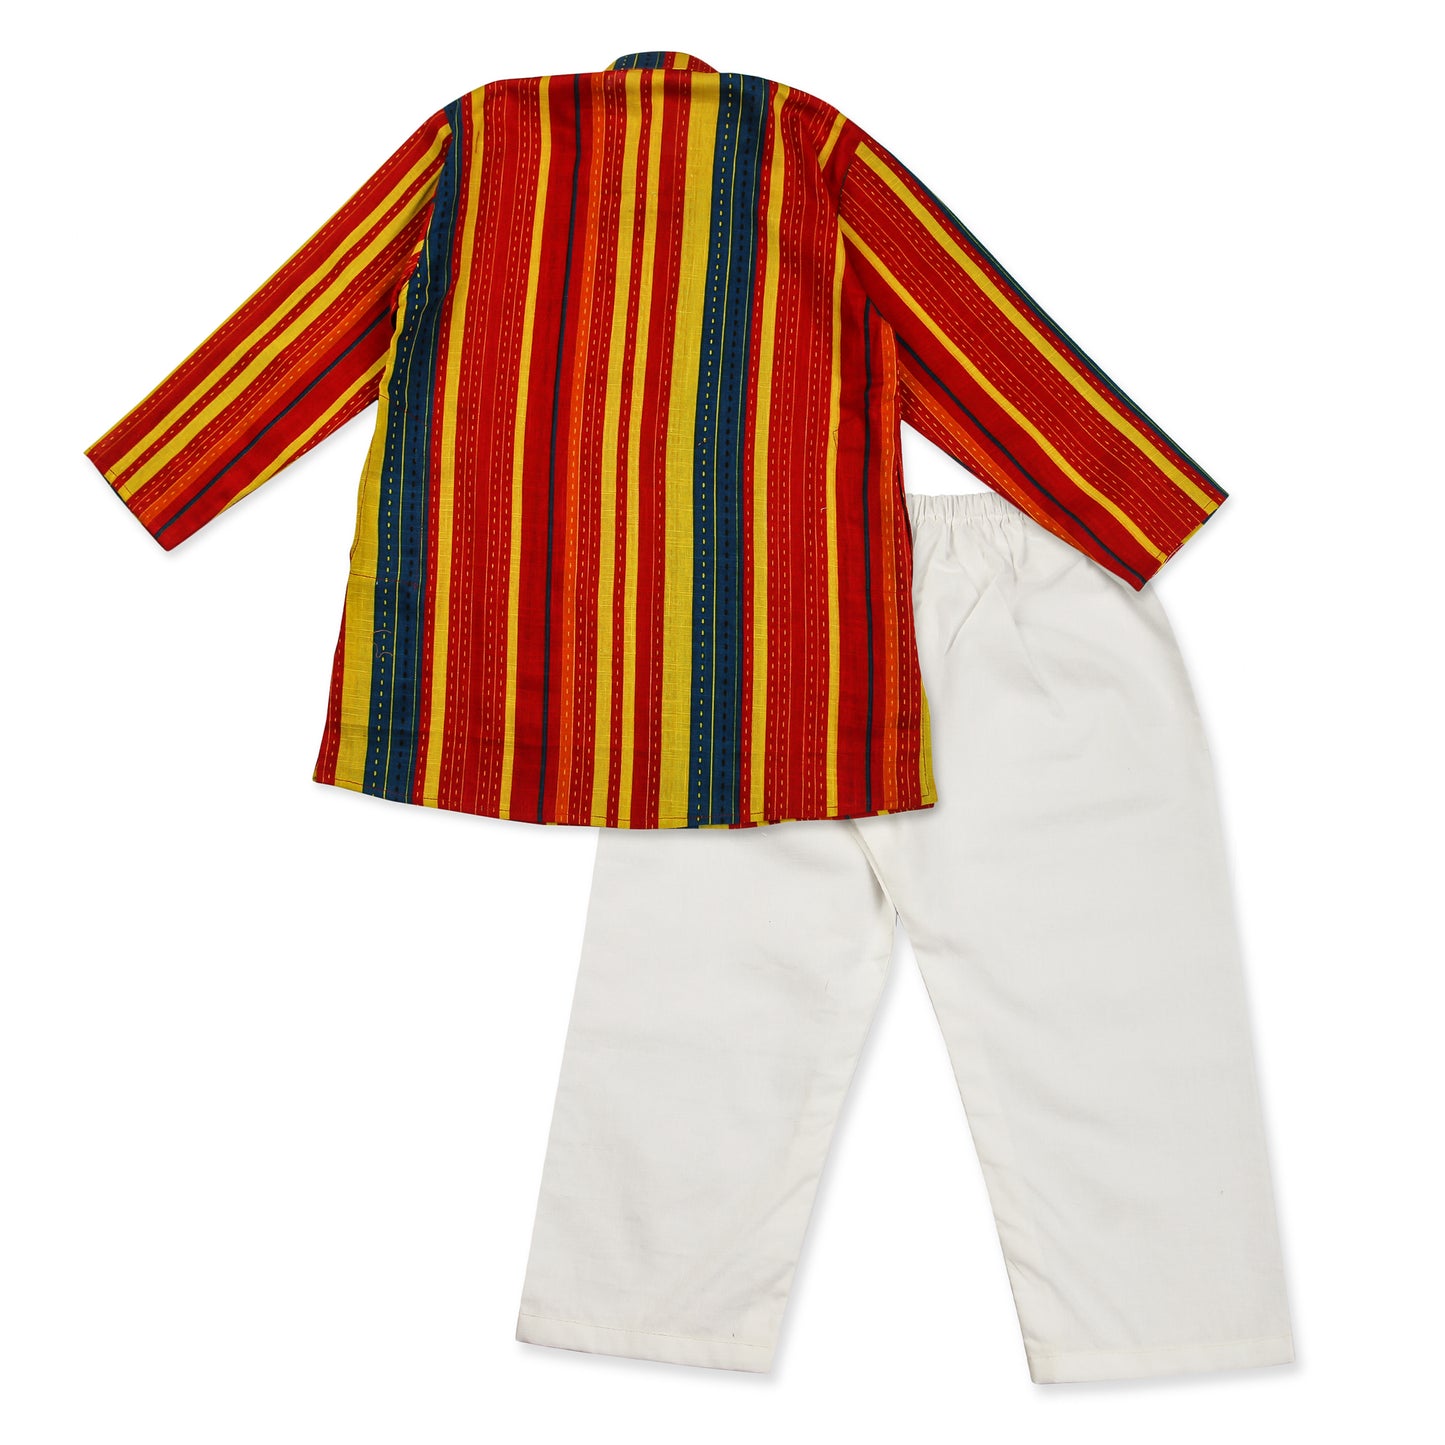 Multicolor Kurta Pajama for Boys, Ages 0-16 Years, Cotton, Check Print